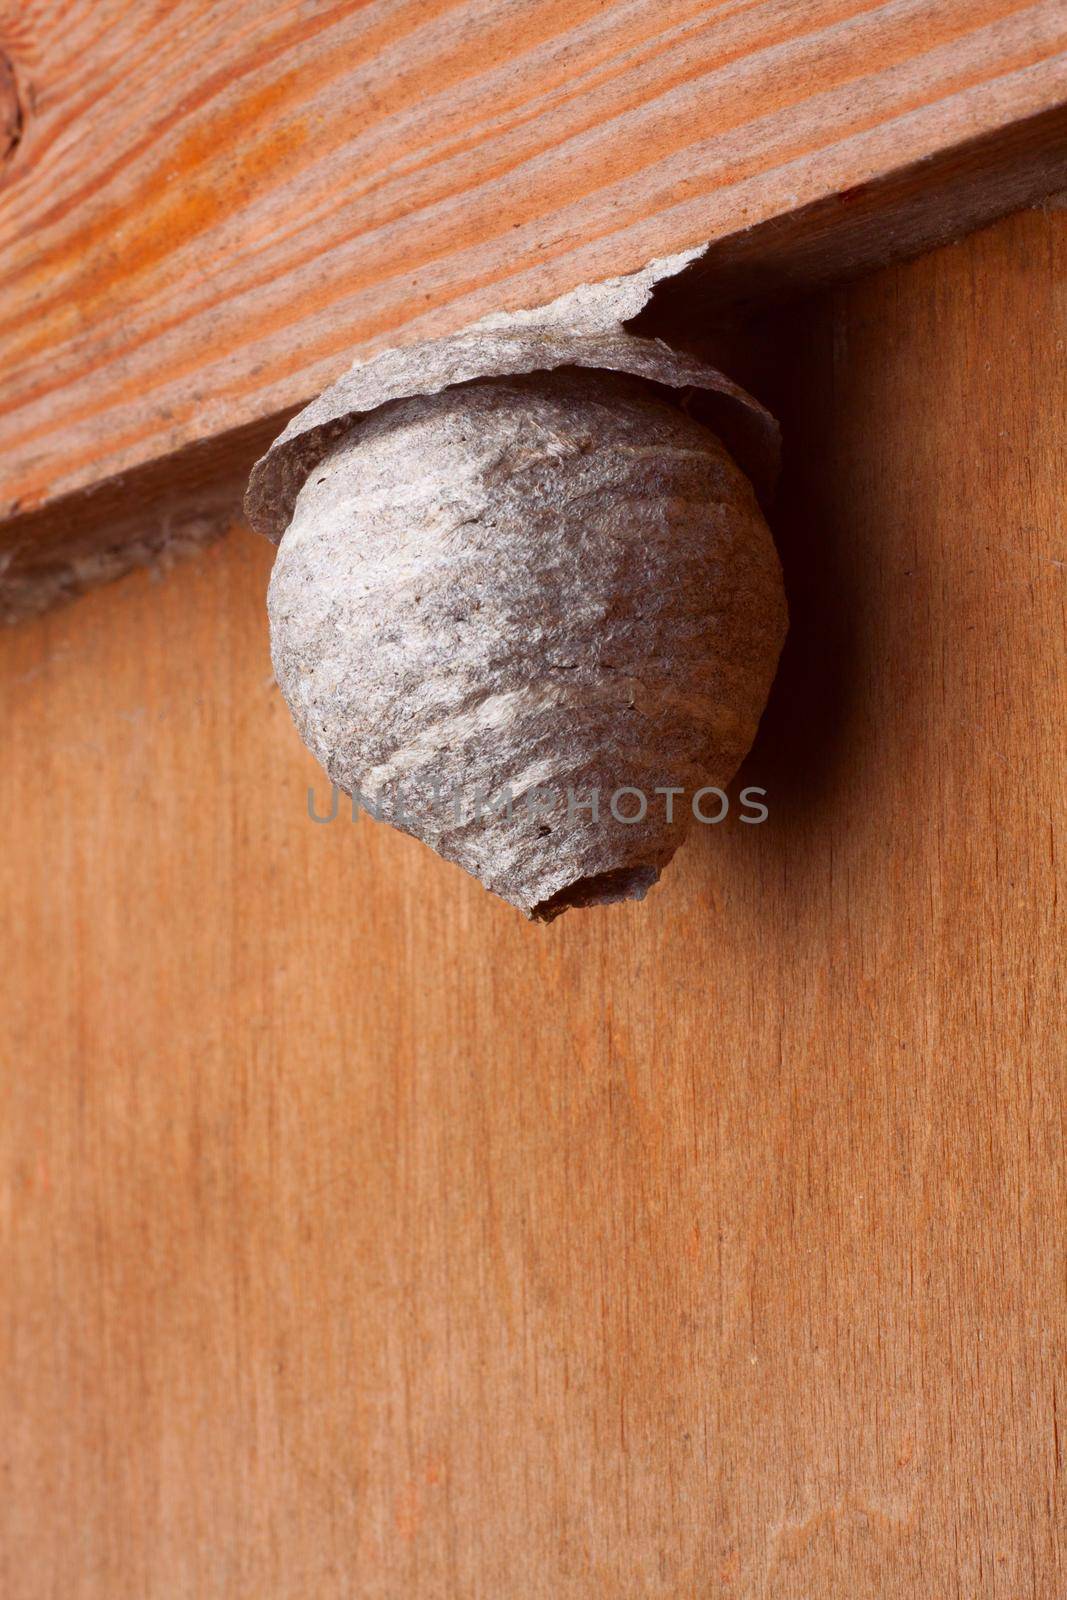 Paper hornet's nest on wooden surface indoor